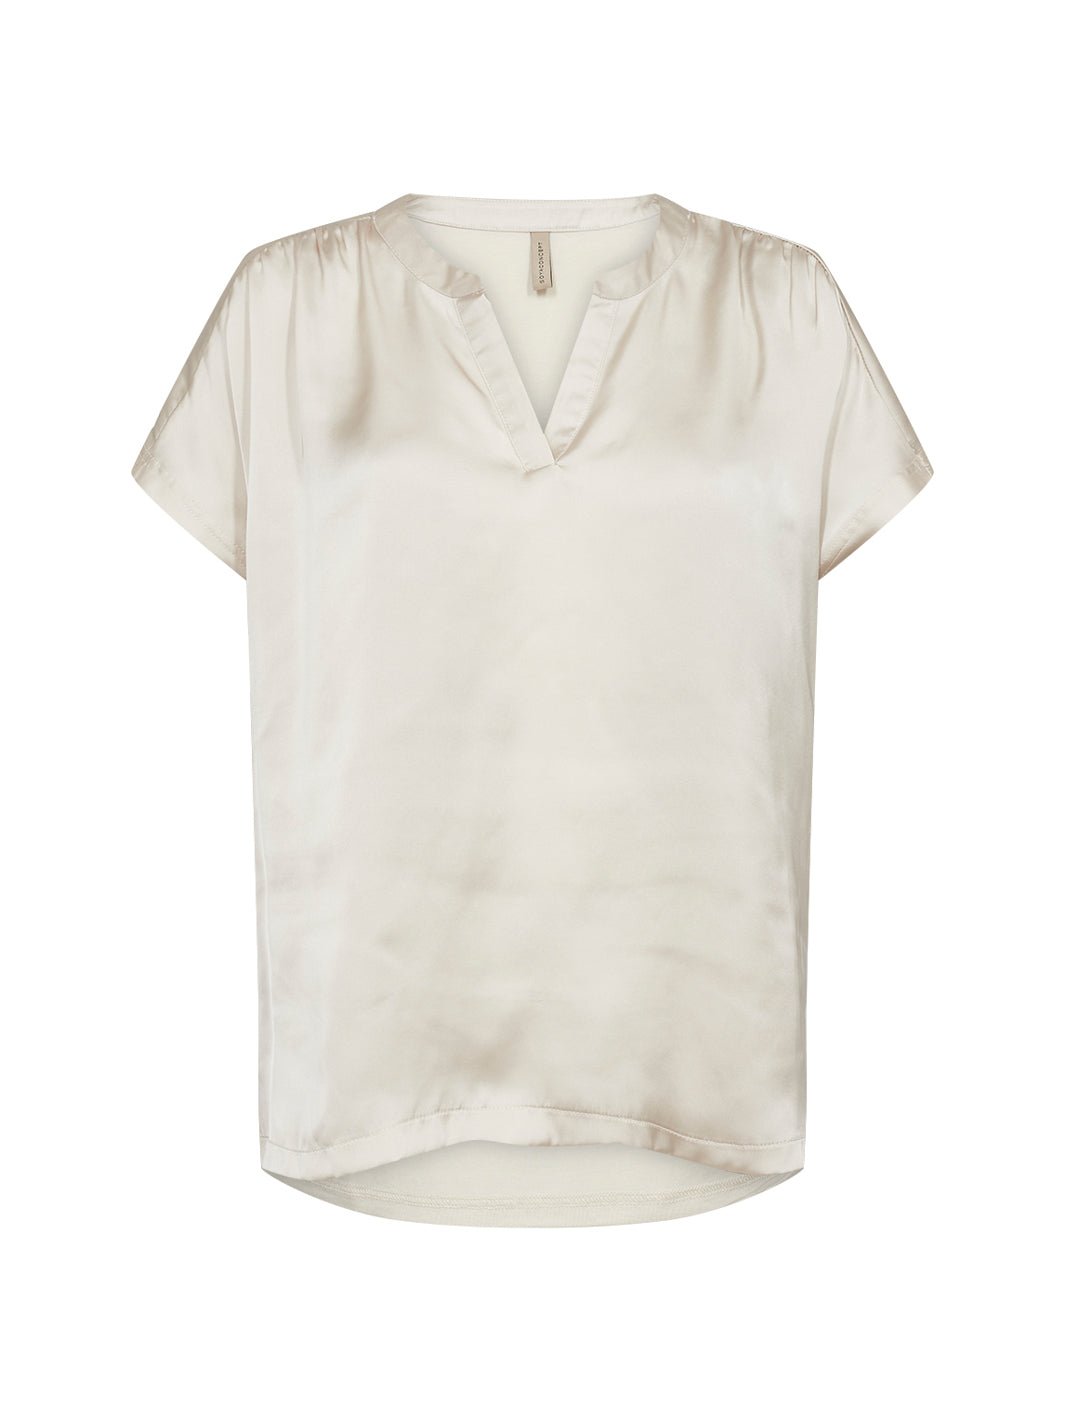 Soya Concept Thilde 49 t-shirt cream - Online-Mode